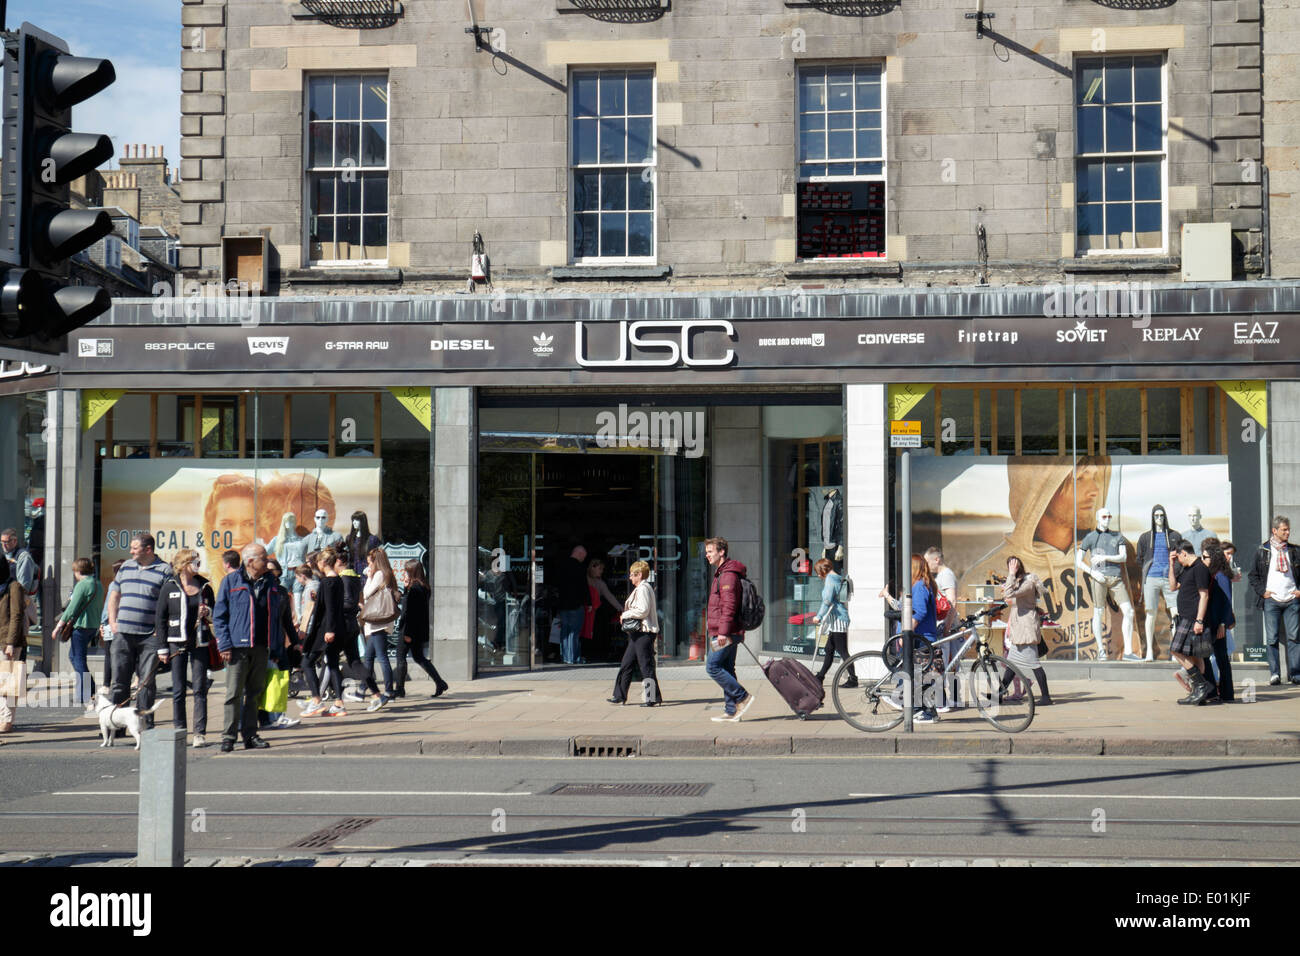 USC shop front on Princes Street, Edinburgh. Stock Photo